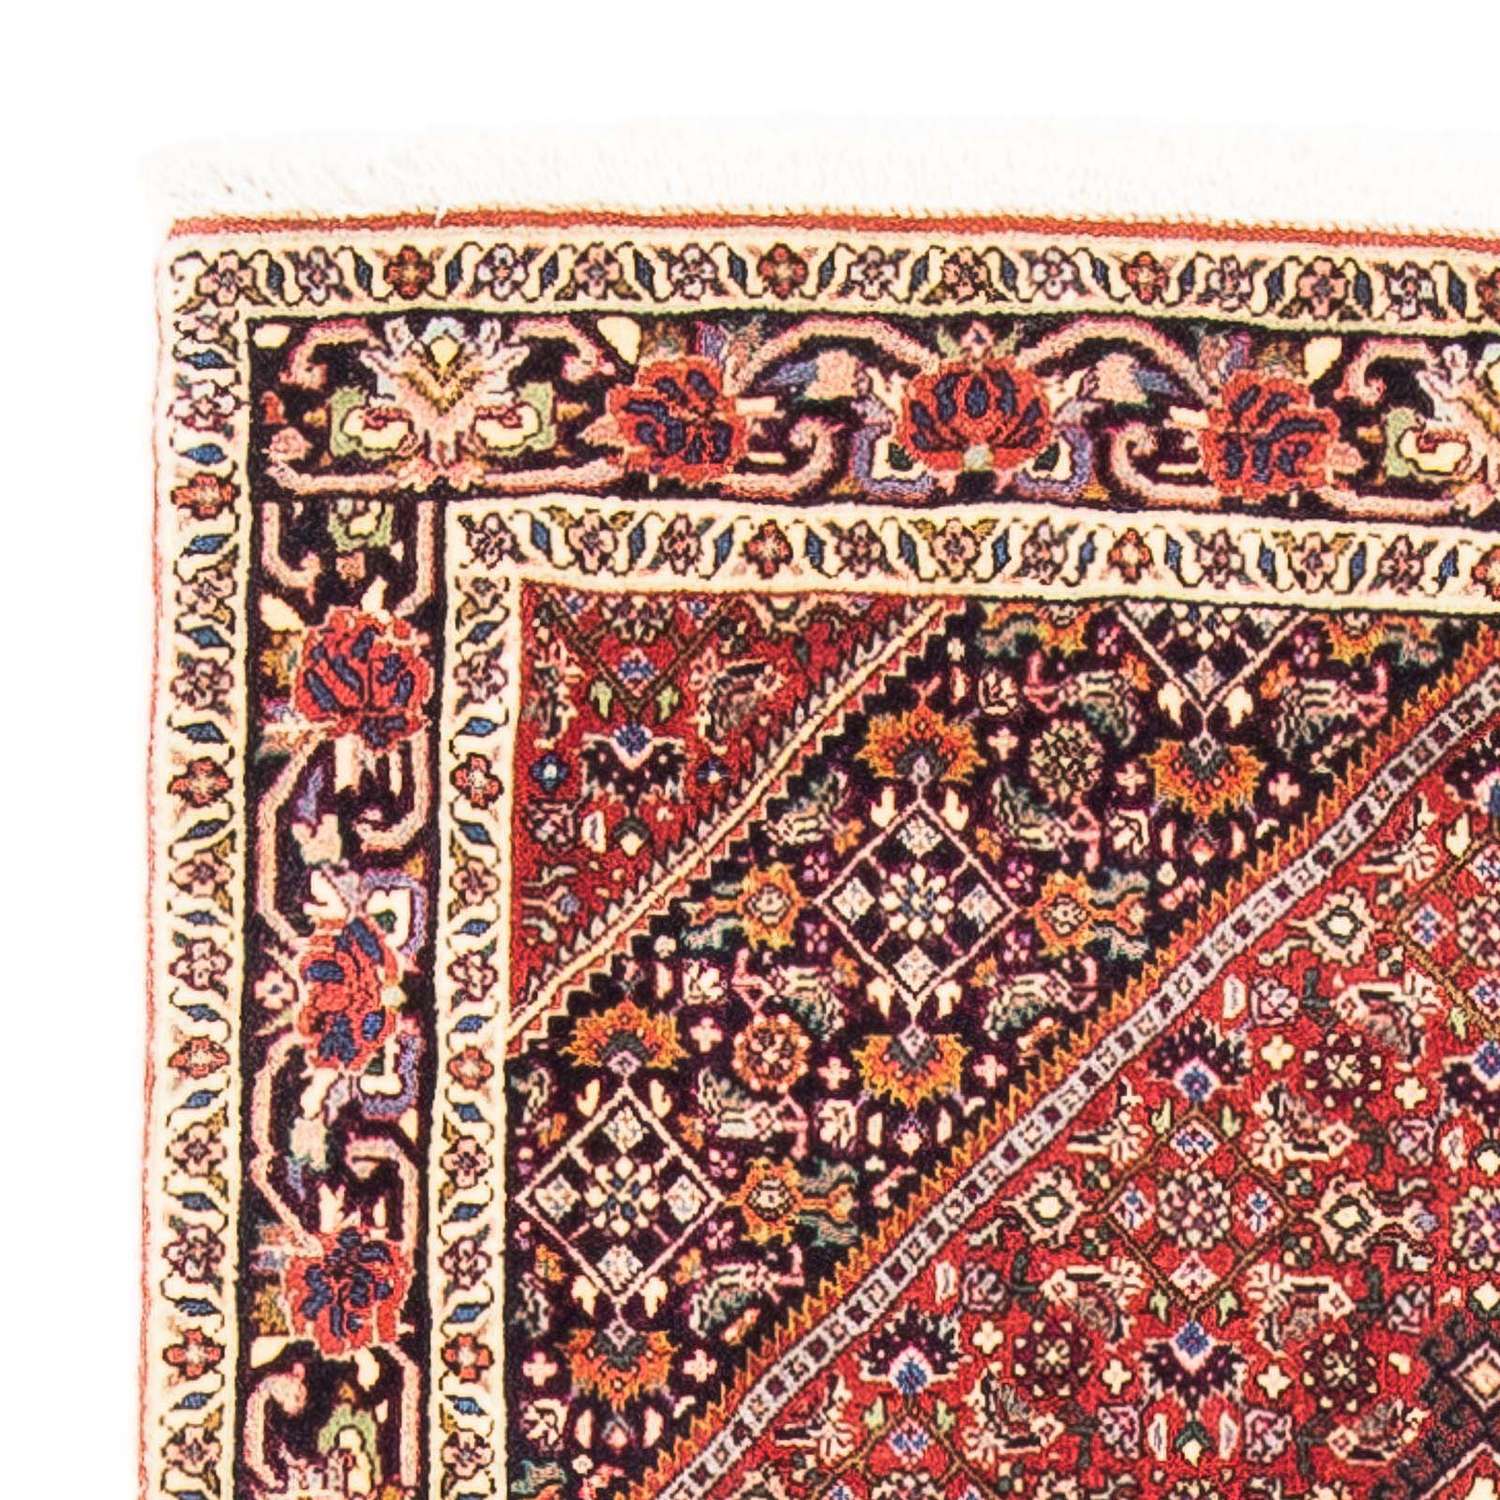 Persisk teppe - Bijar - 153 x 90 cm - rød